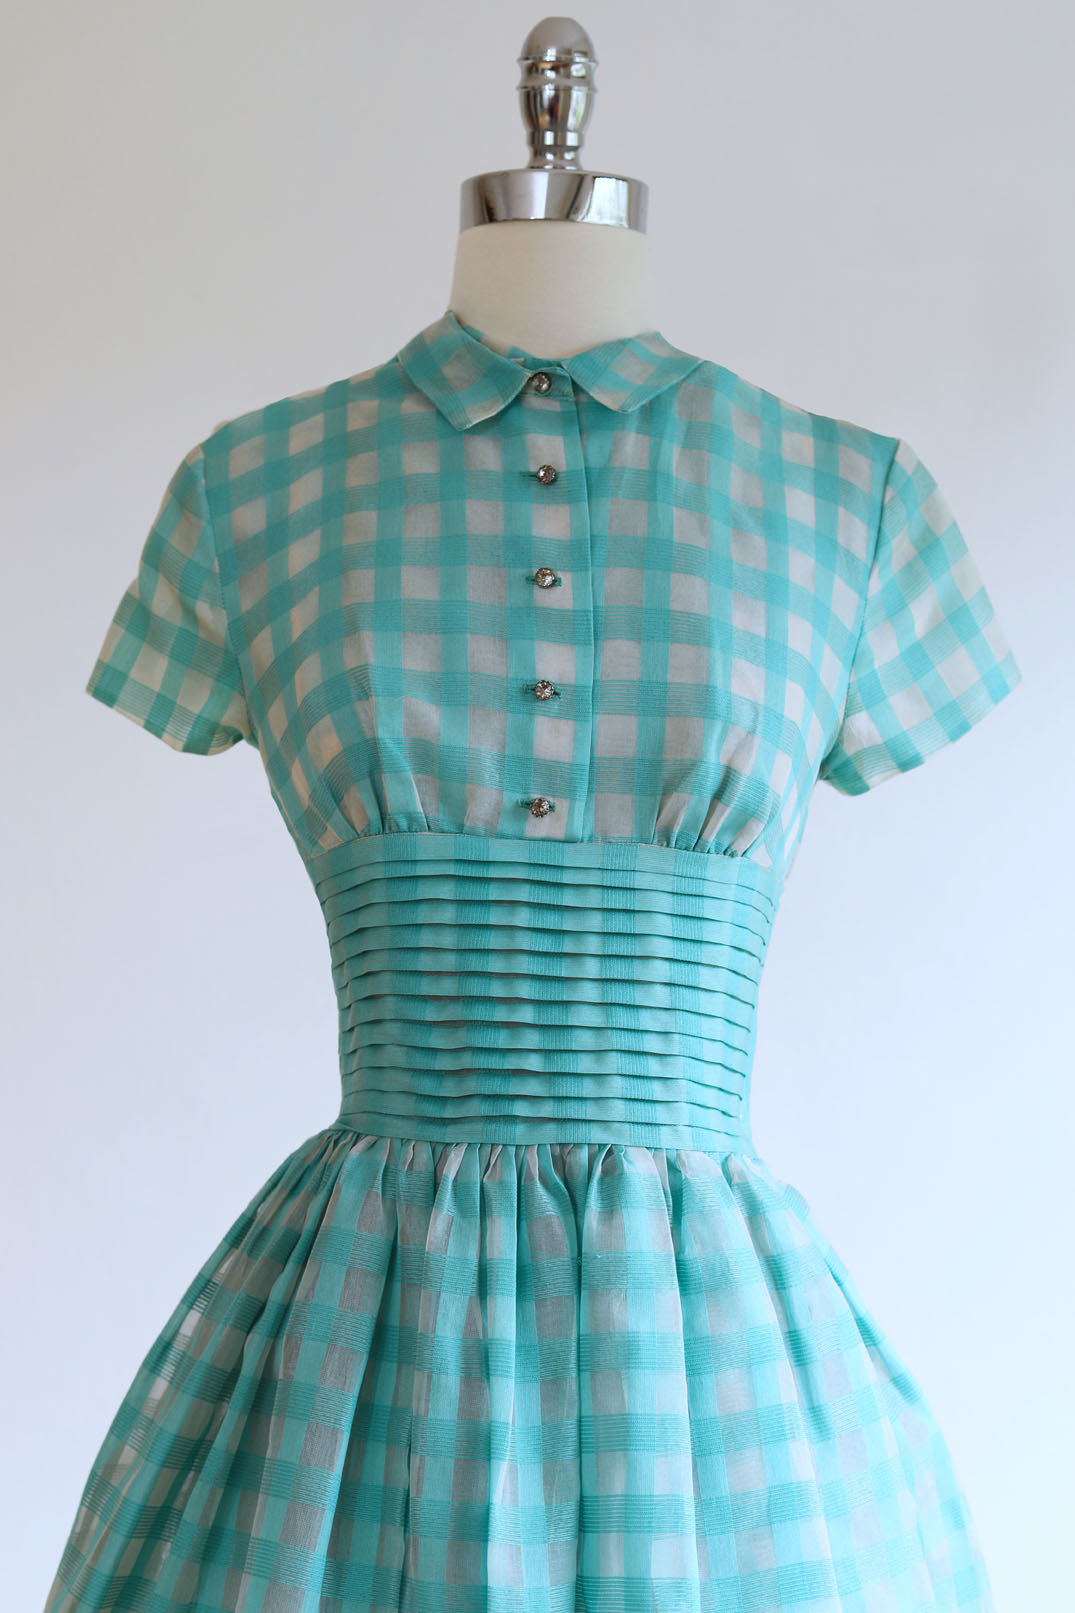 Vintage 1950s Dress - DARLING Mint Green Plaid Organdy Party Shirtwaist Frock w Rhinestones Junior Size XS - S